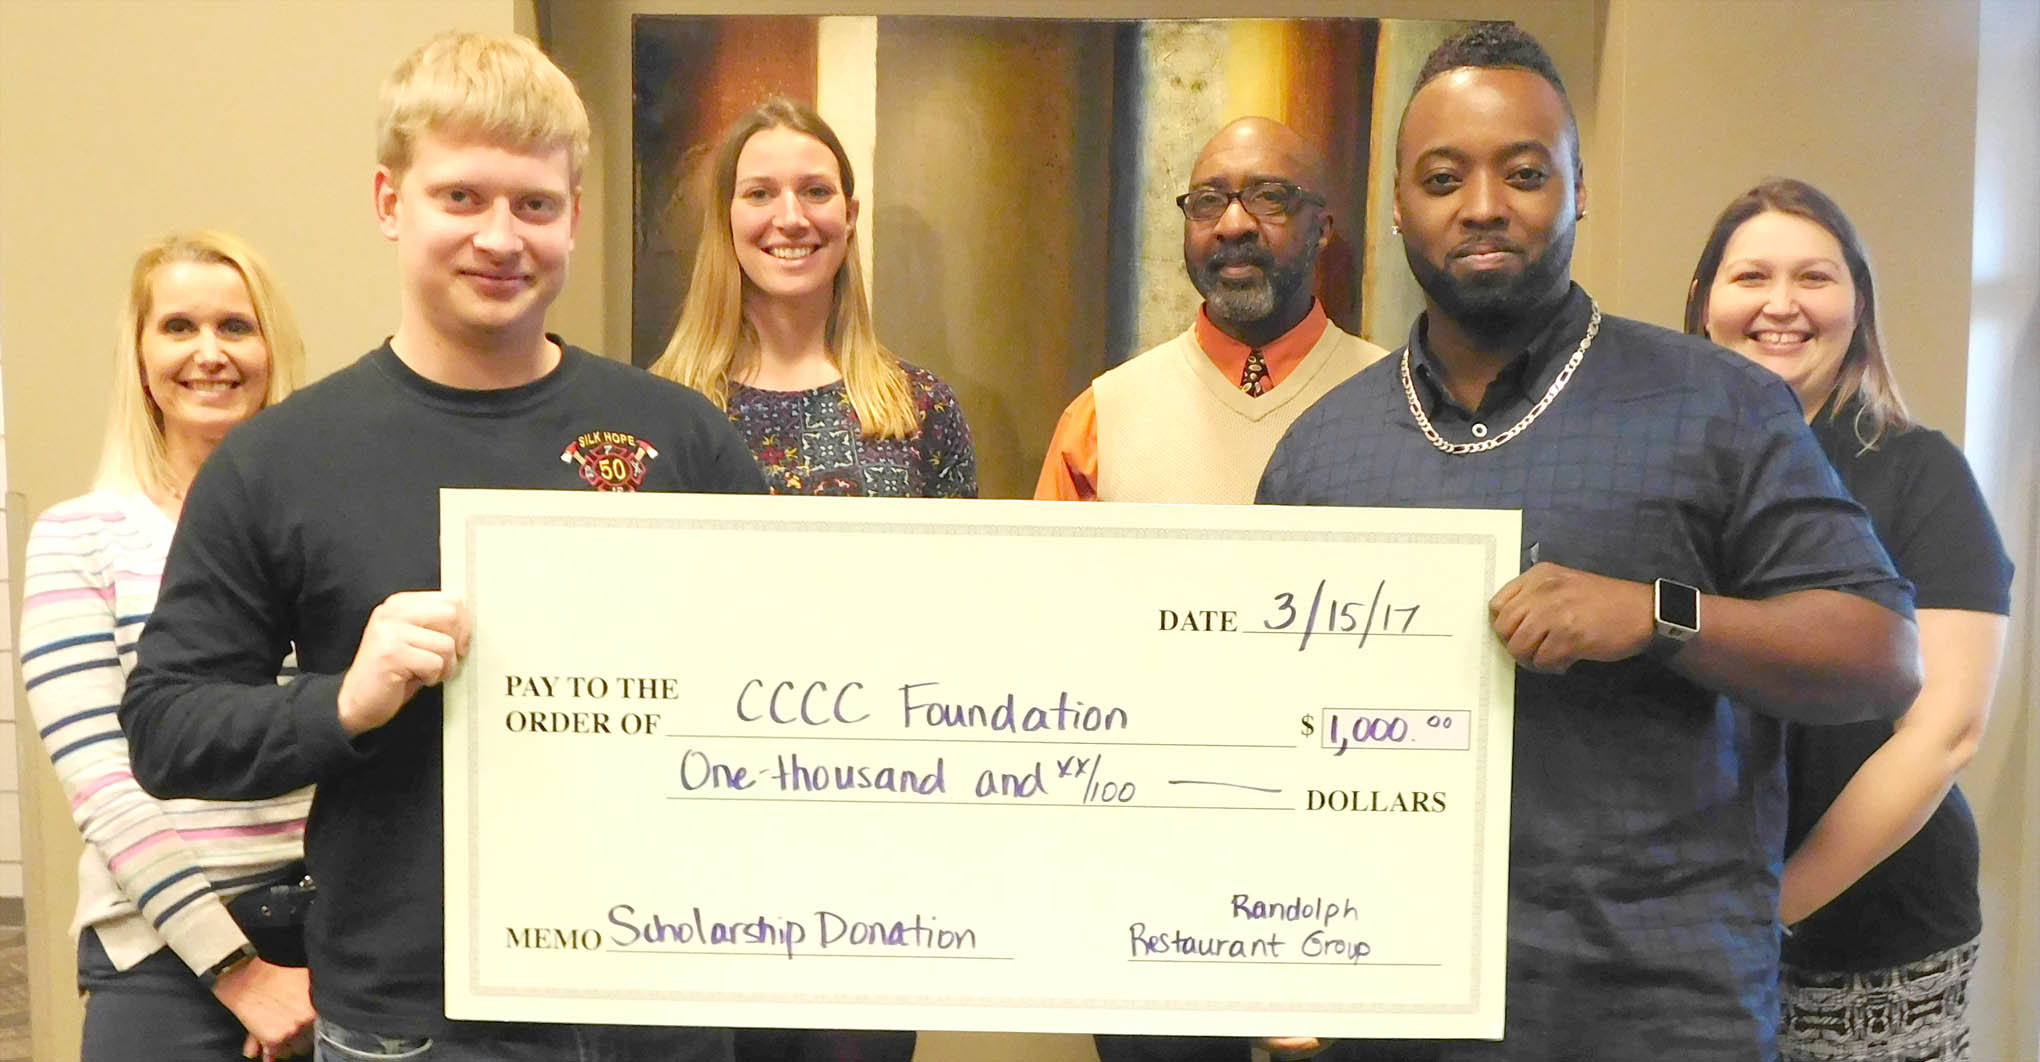 Randolph Restaurant Group provides scholarship funding for program at CCCC